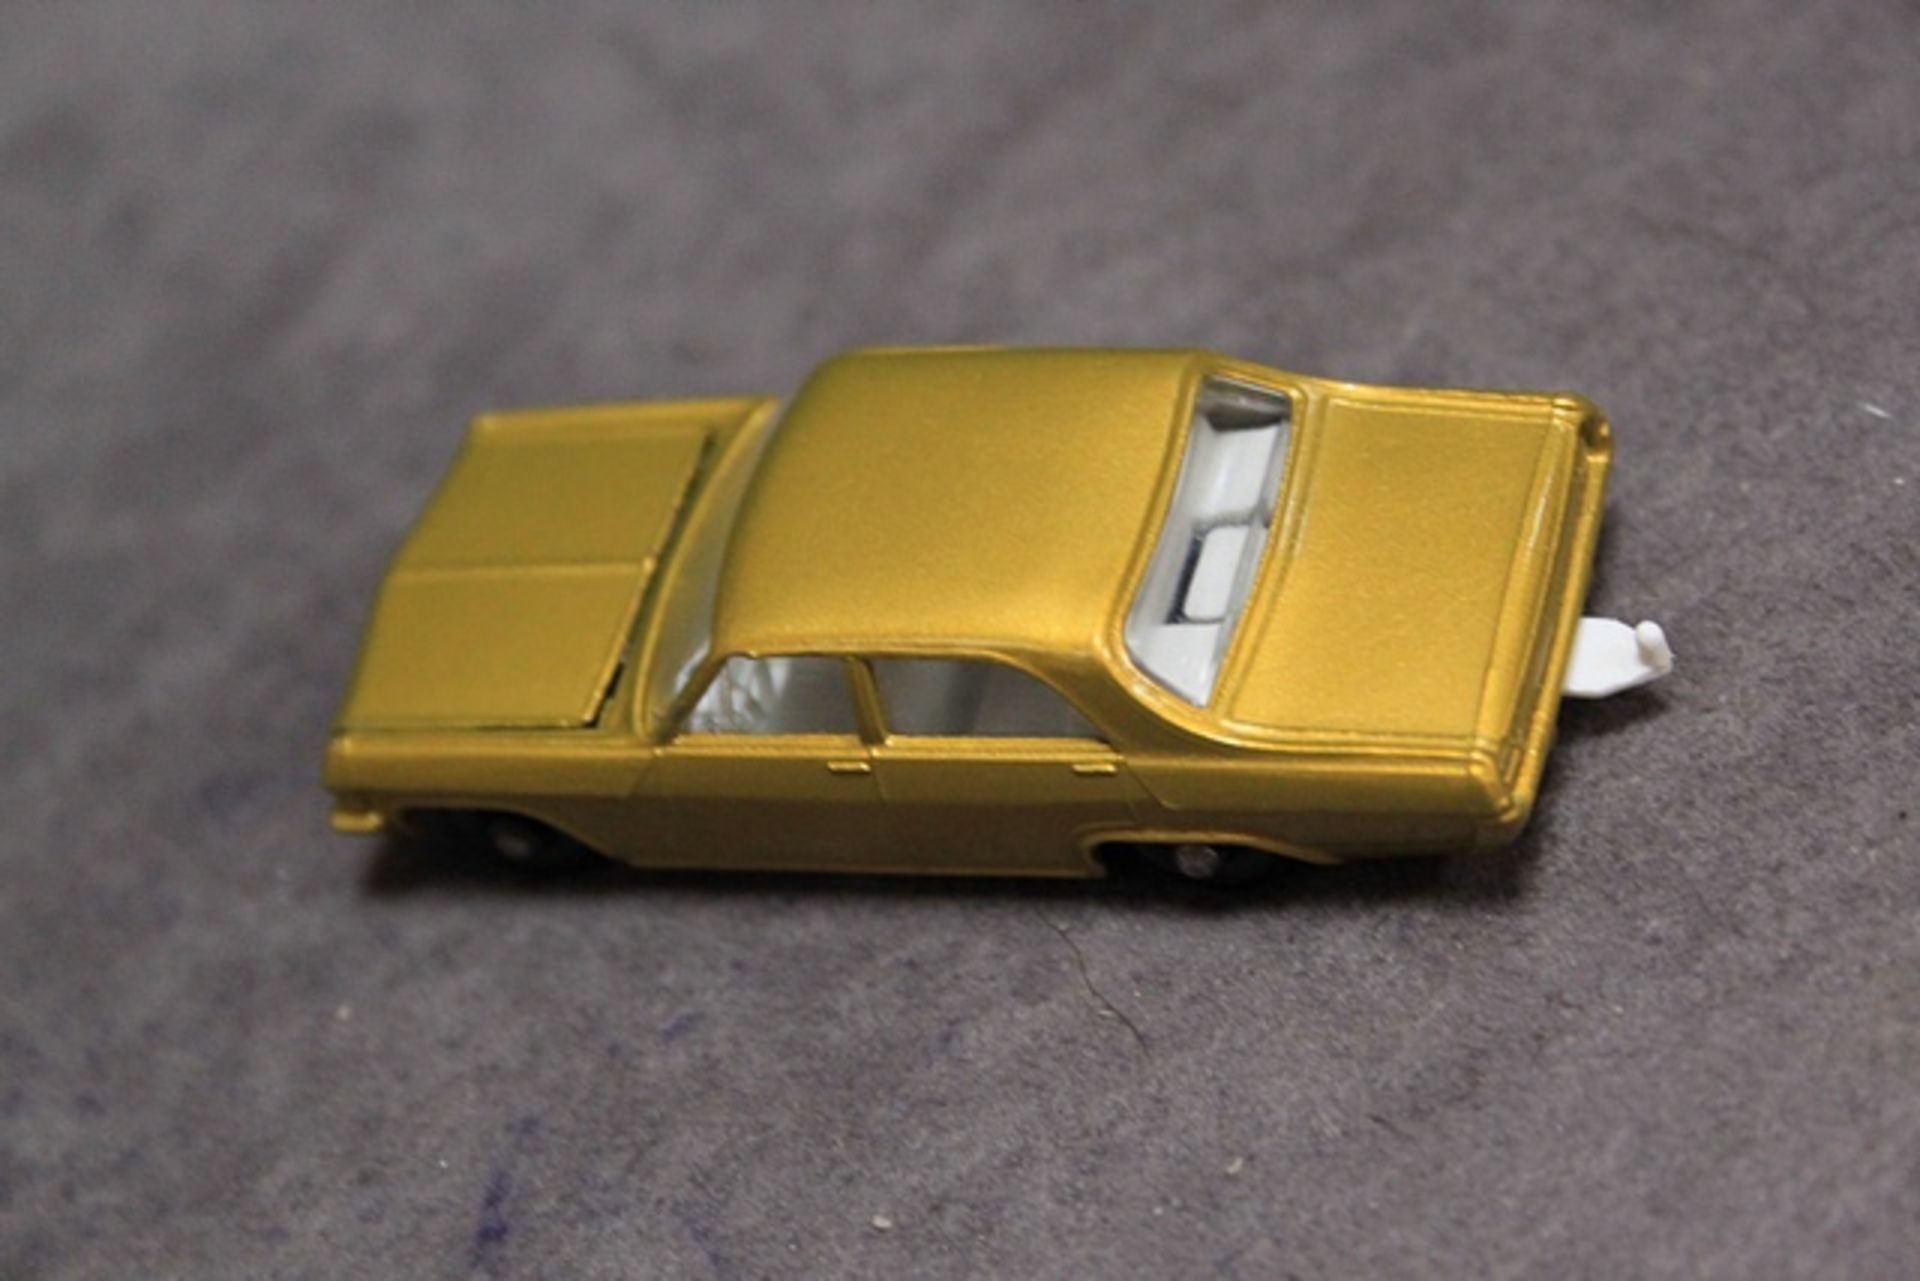 Mint Matchbox Series diecast #36 Opel Diplomat in gold in firm excellent rarer box